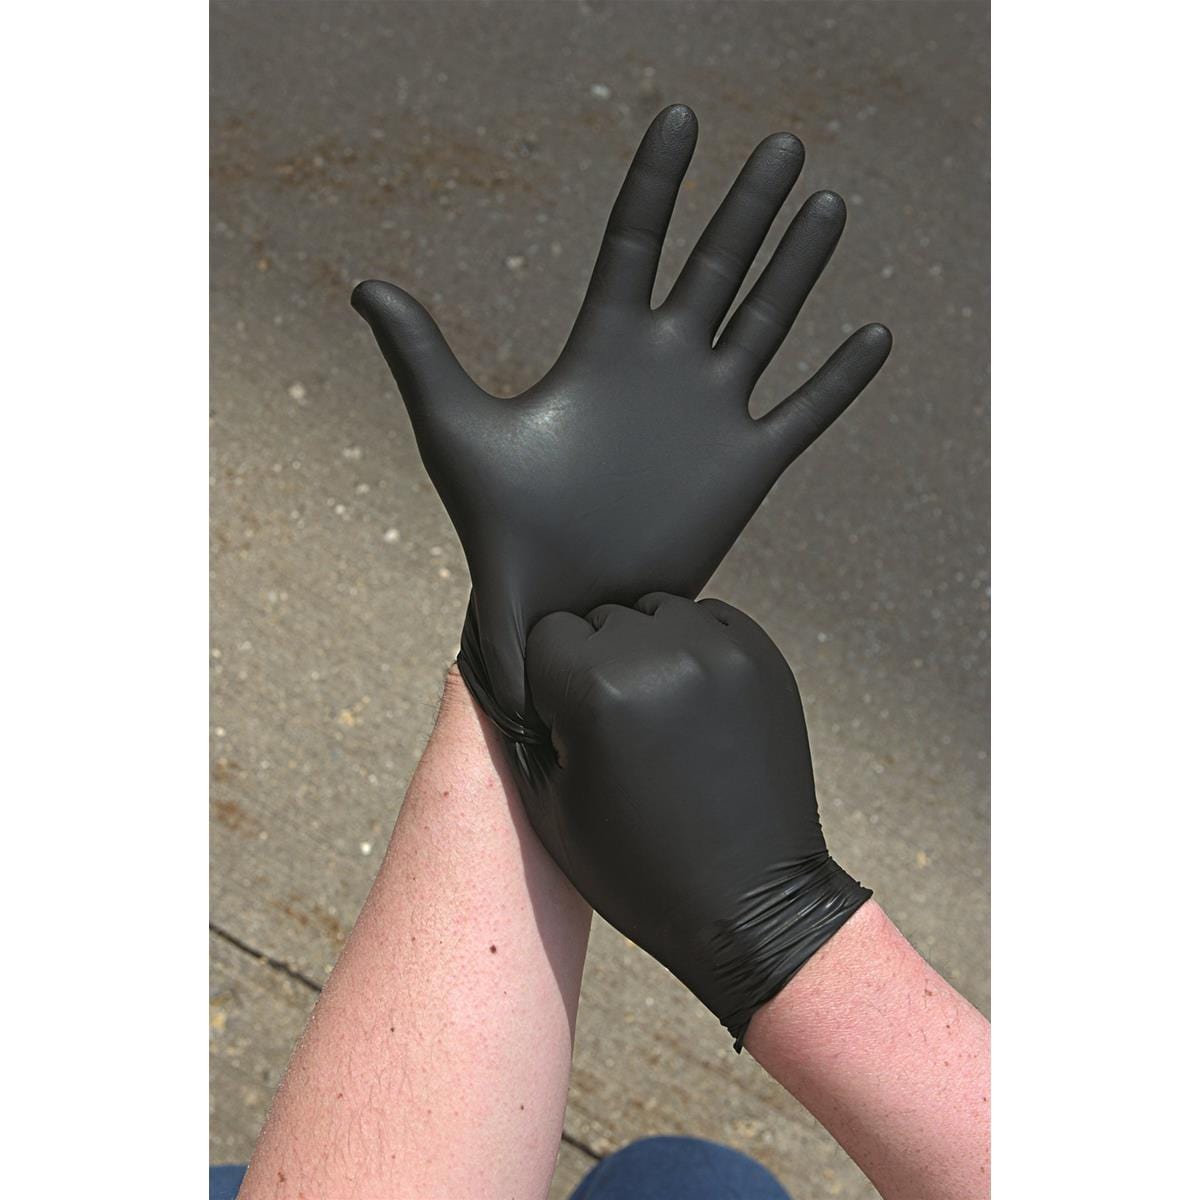 SHOWA N-DEX 7700PFT 4-mil Disposable Nitrile Gloves, 50pk